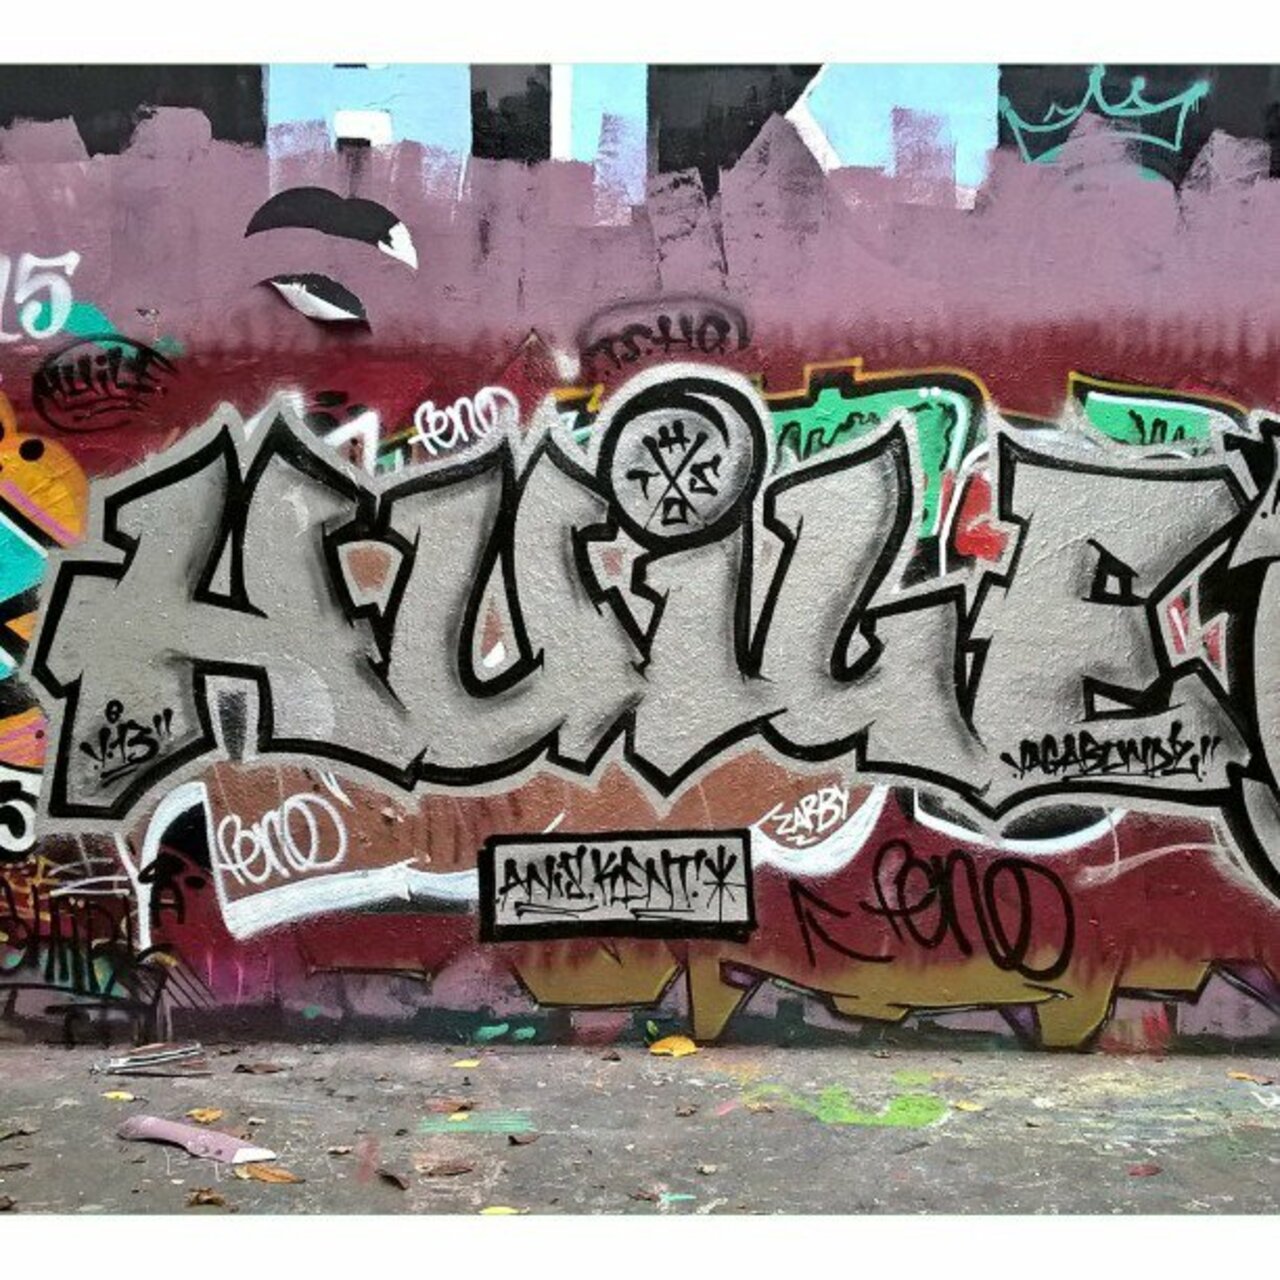 HUILE
#TSHO #streetart #graffiti #graff #art #fatcap #bombing #sprayart #spraycanart #wallart #handstyle #lettering… https://t.co/Az7GhlQYv6